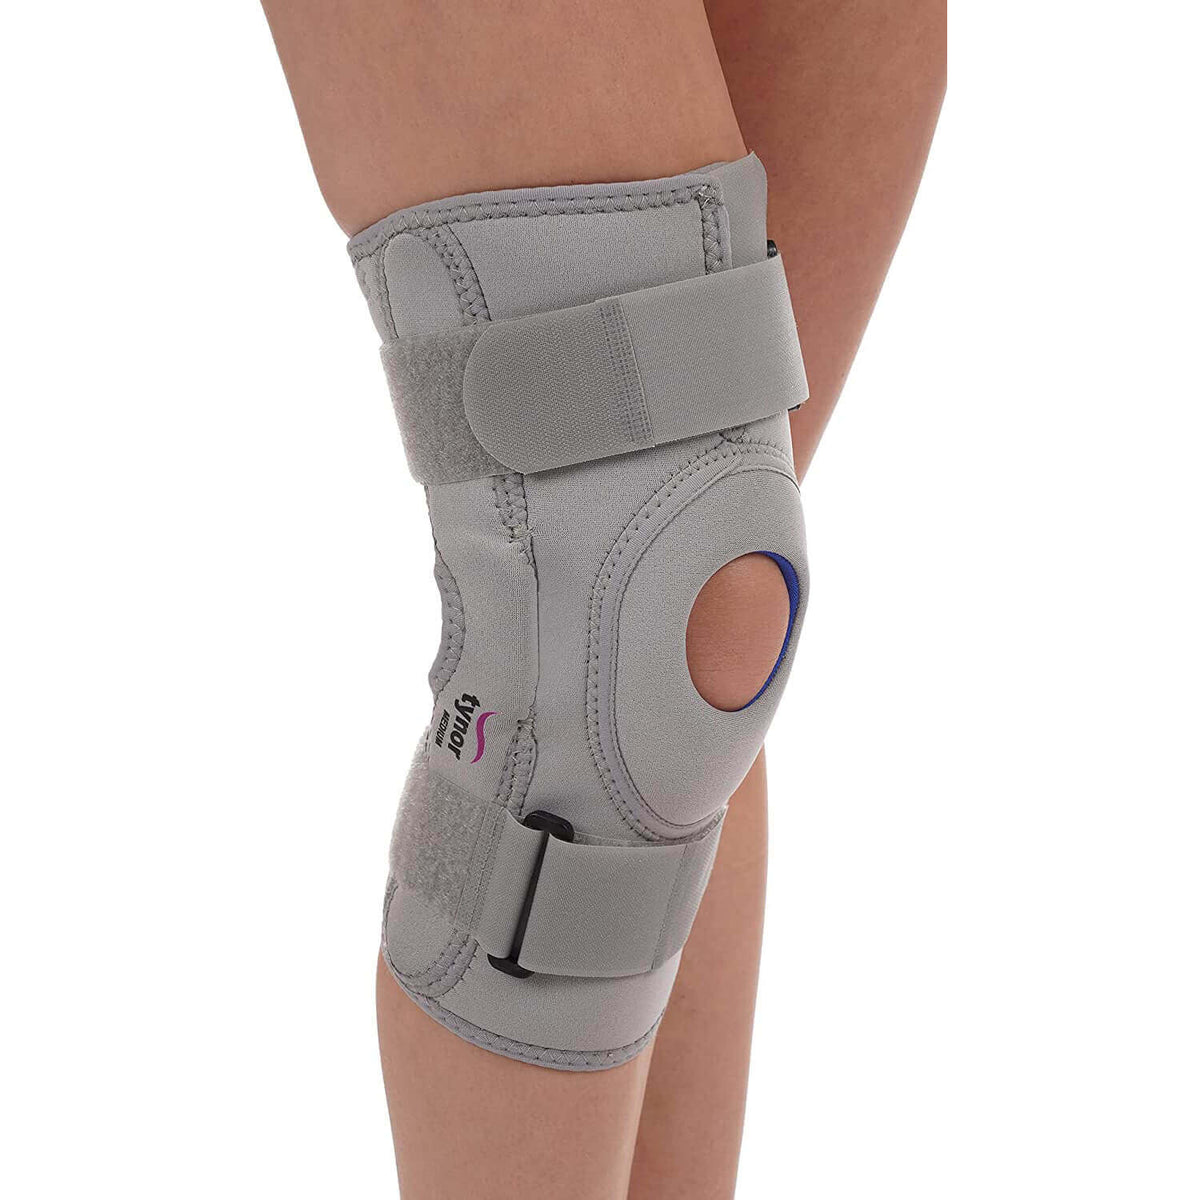 Neoprene Hinged knee support in grey color-1